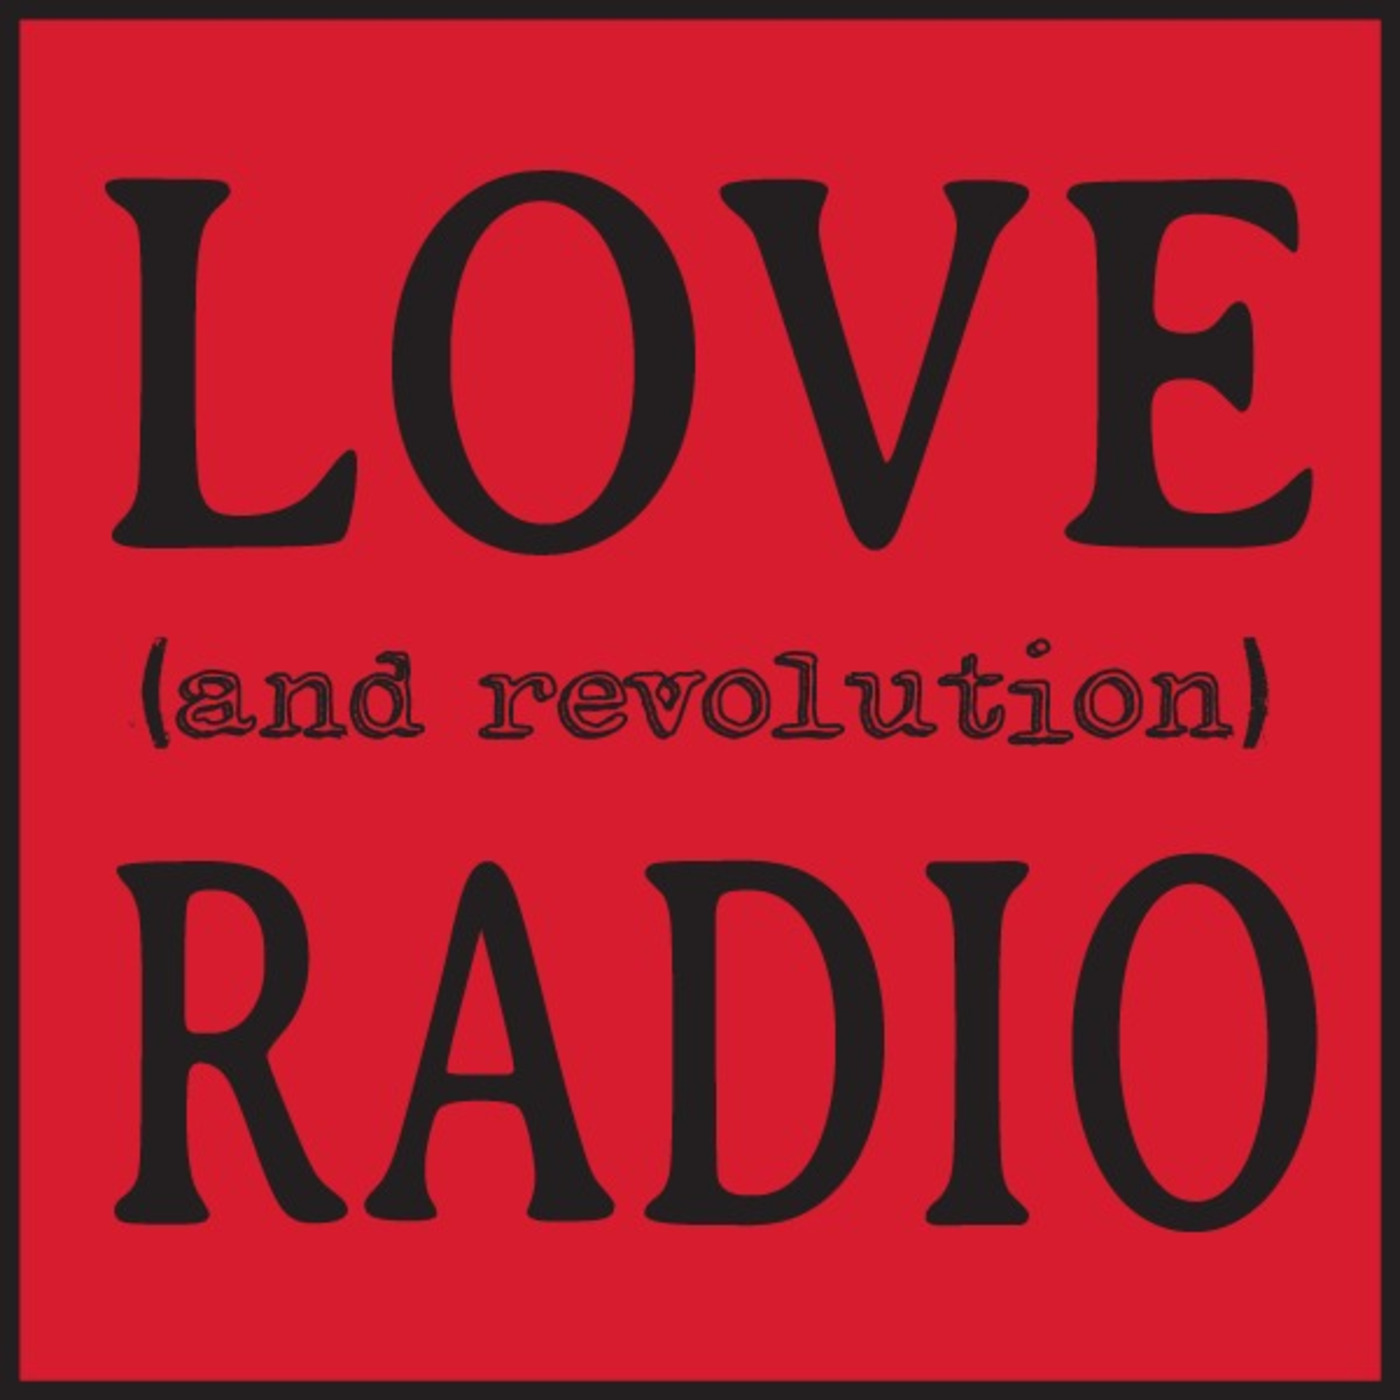 Love (and Revolution) Radio